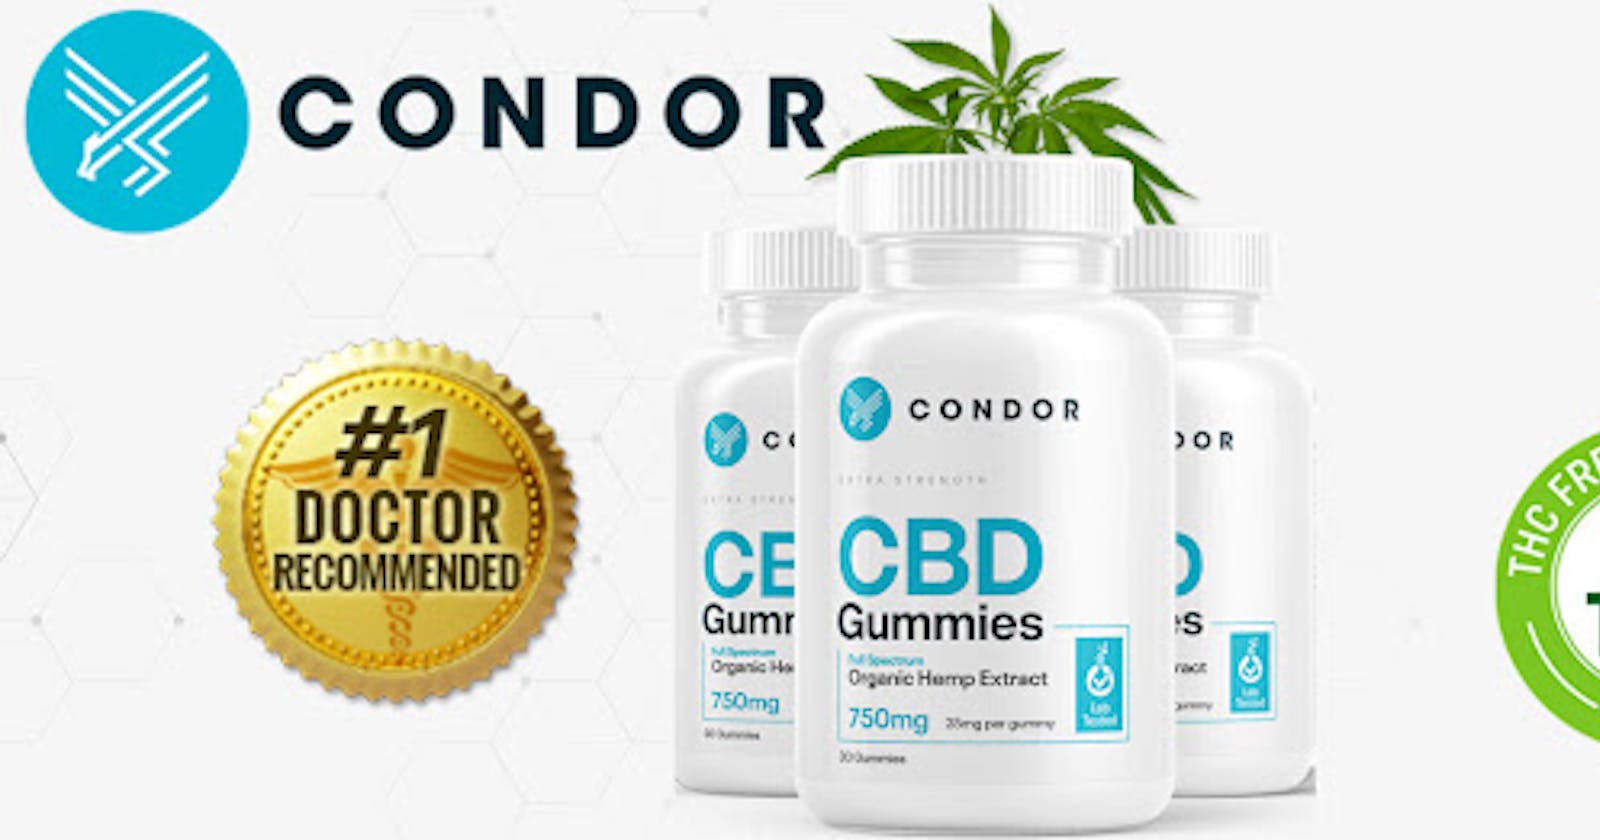 Condor CBD Gummies: Reviews, Benefit, Cost| Must Read To Buy|